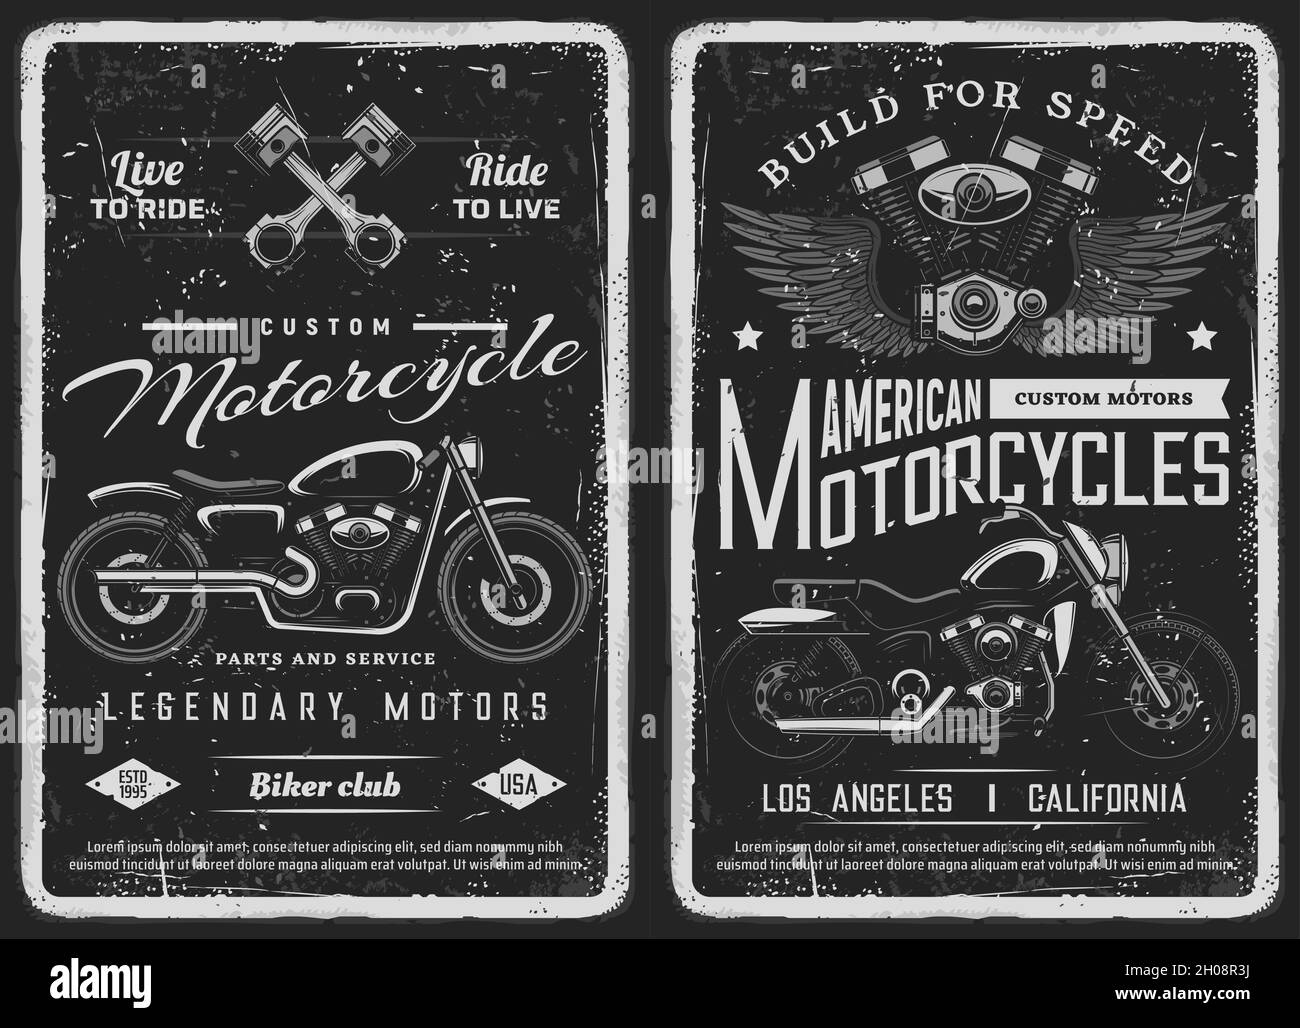 Vintage Tshirt Design Of Classic Motorcycle Garage Stock